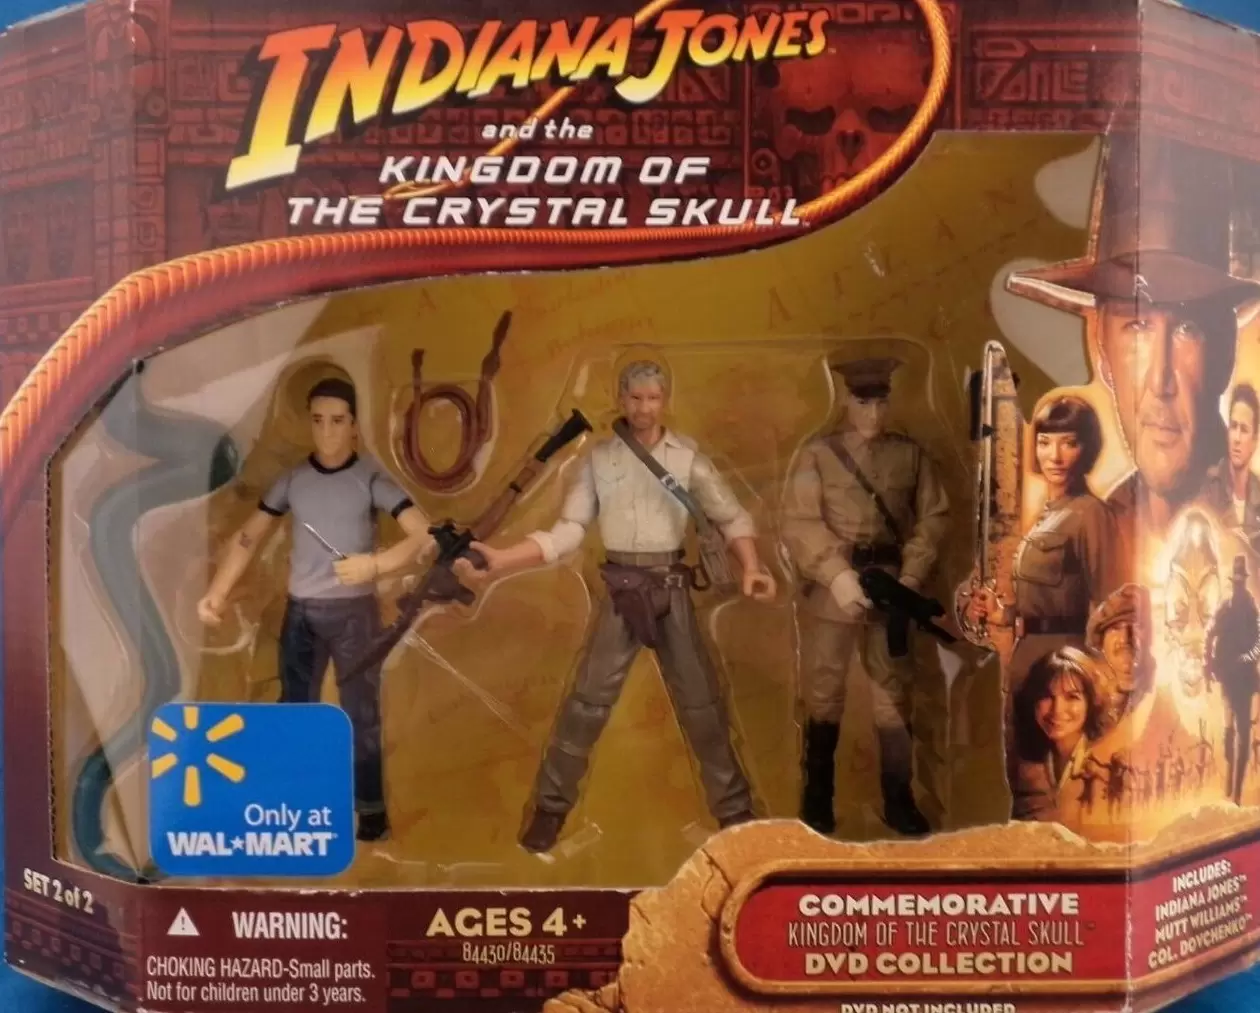 Indiana Jones - Hasbro - Kingdom of the Crystal Skull - Commemorative DVD Collection Set 2/2